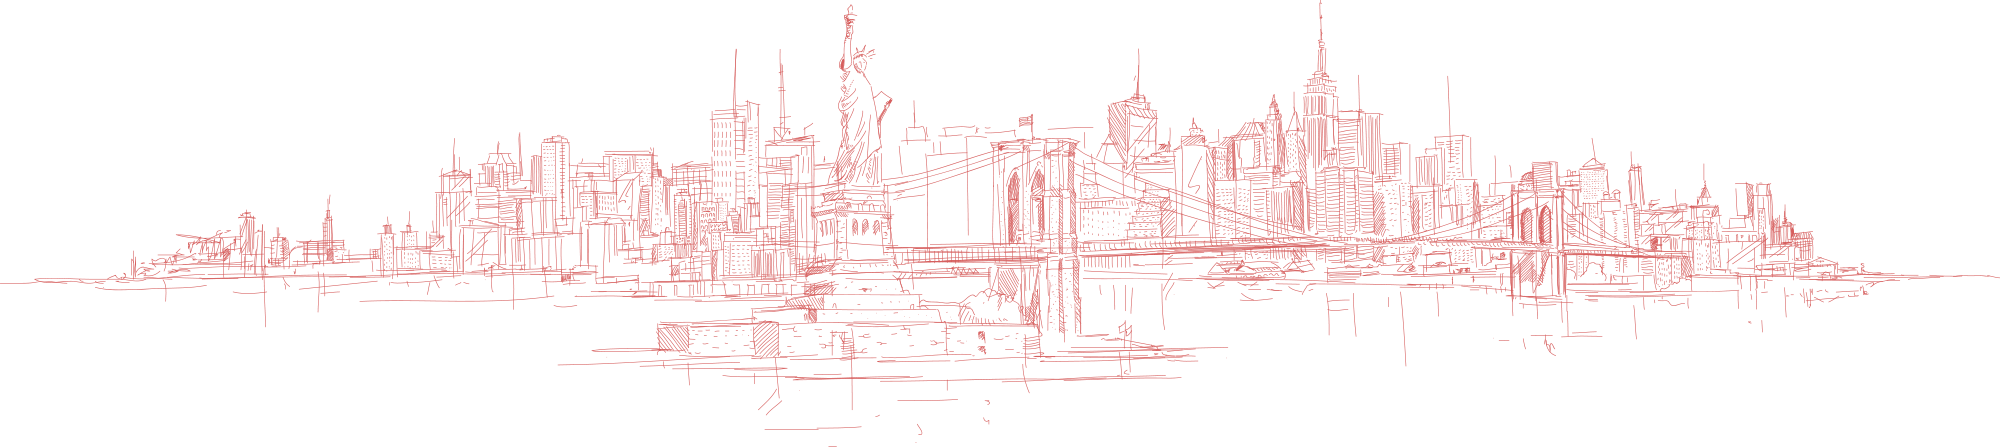 Line drawing of New York skyline